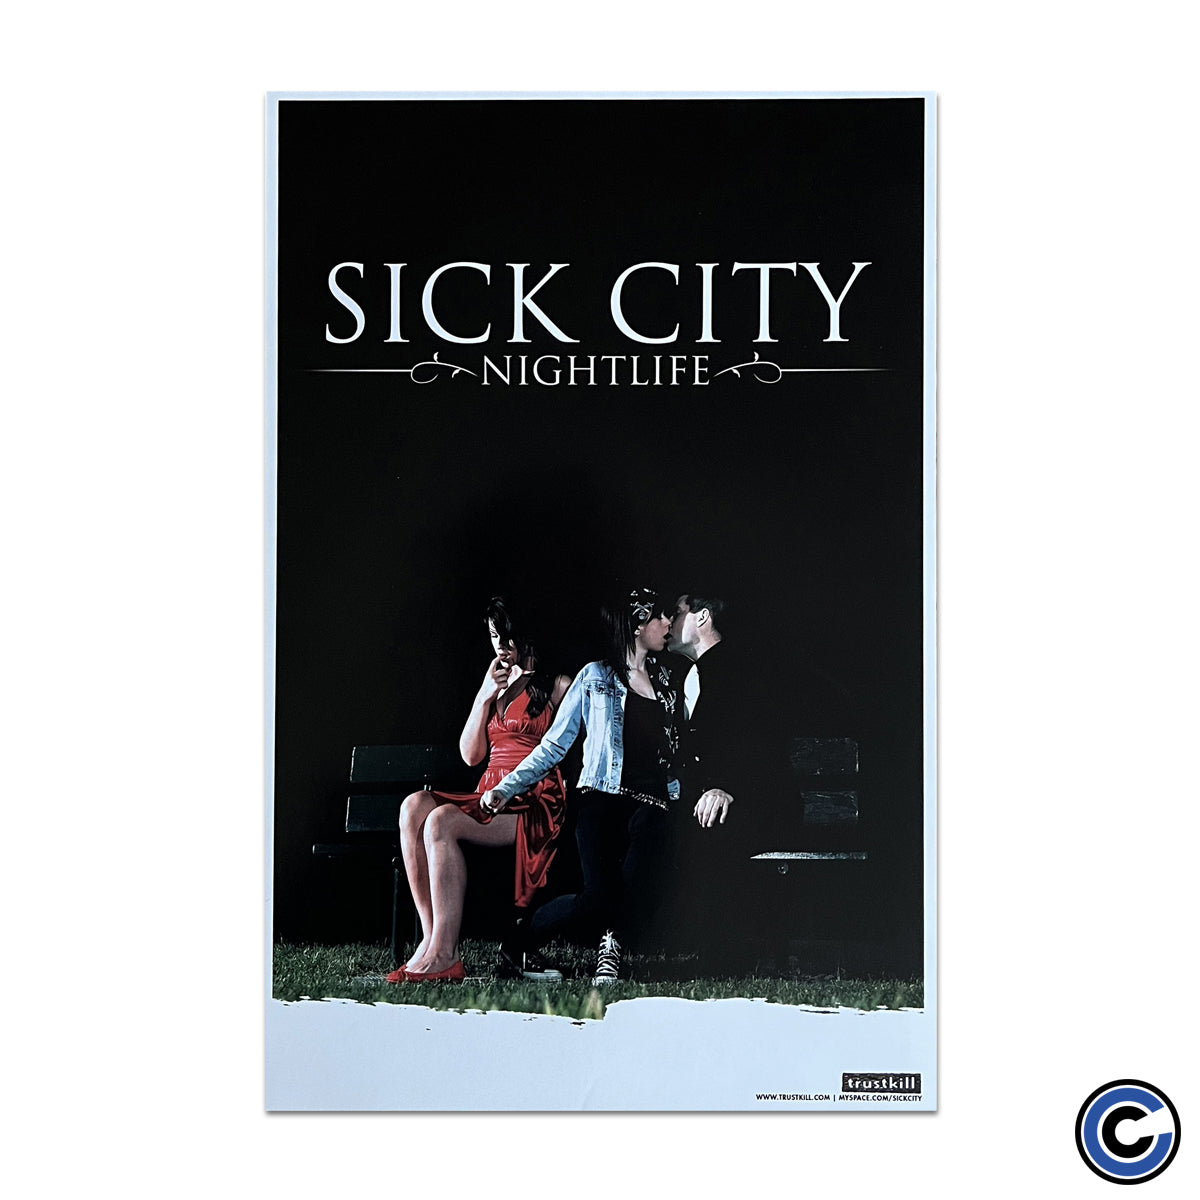 Sick City "Night Life" Poster